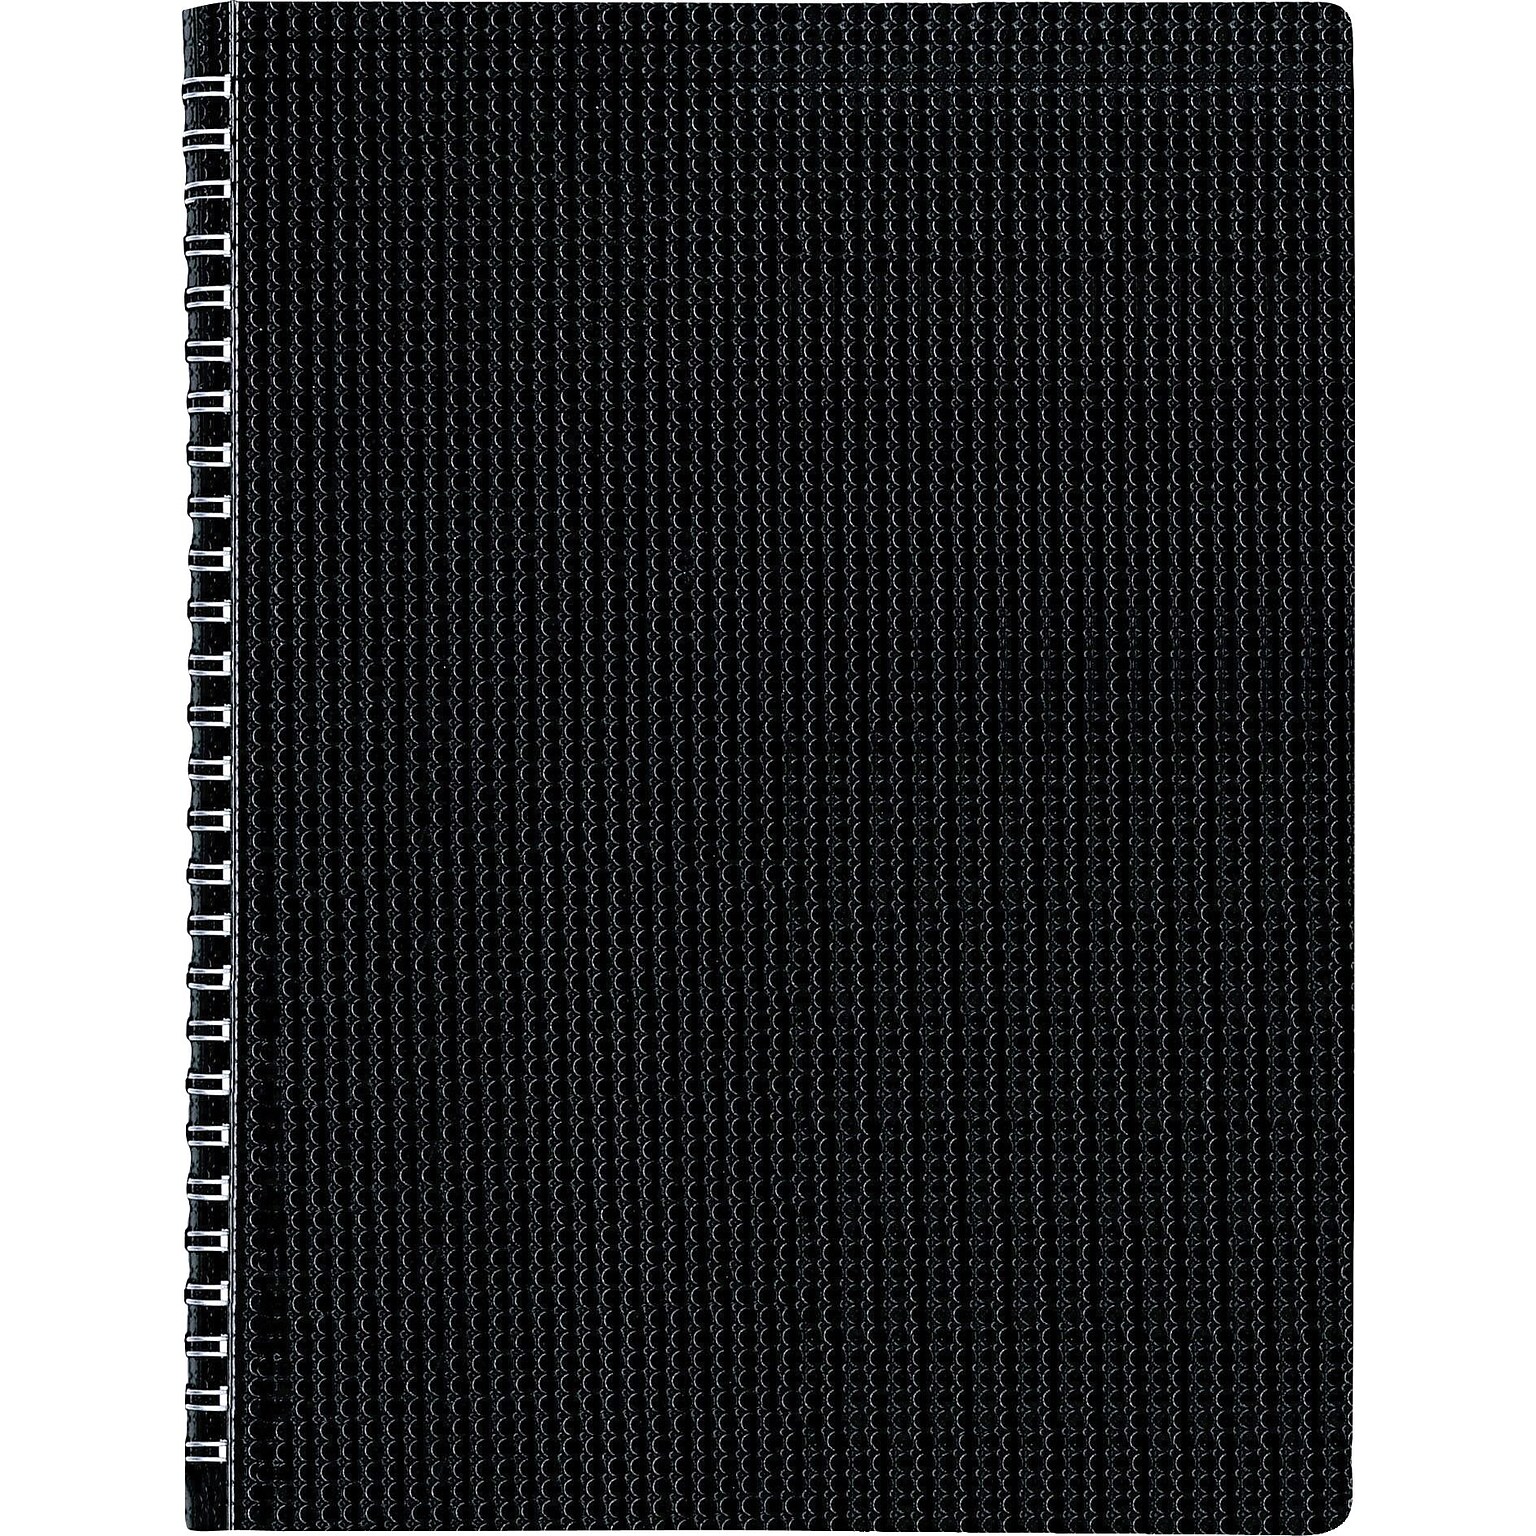 Blueline DuraFlex 1-Subject Professional Notebooks, 8.5 x 11, College Ruled, 80 Sheets, Black (B41.81)